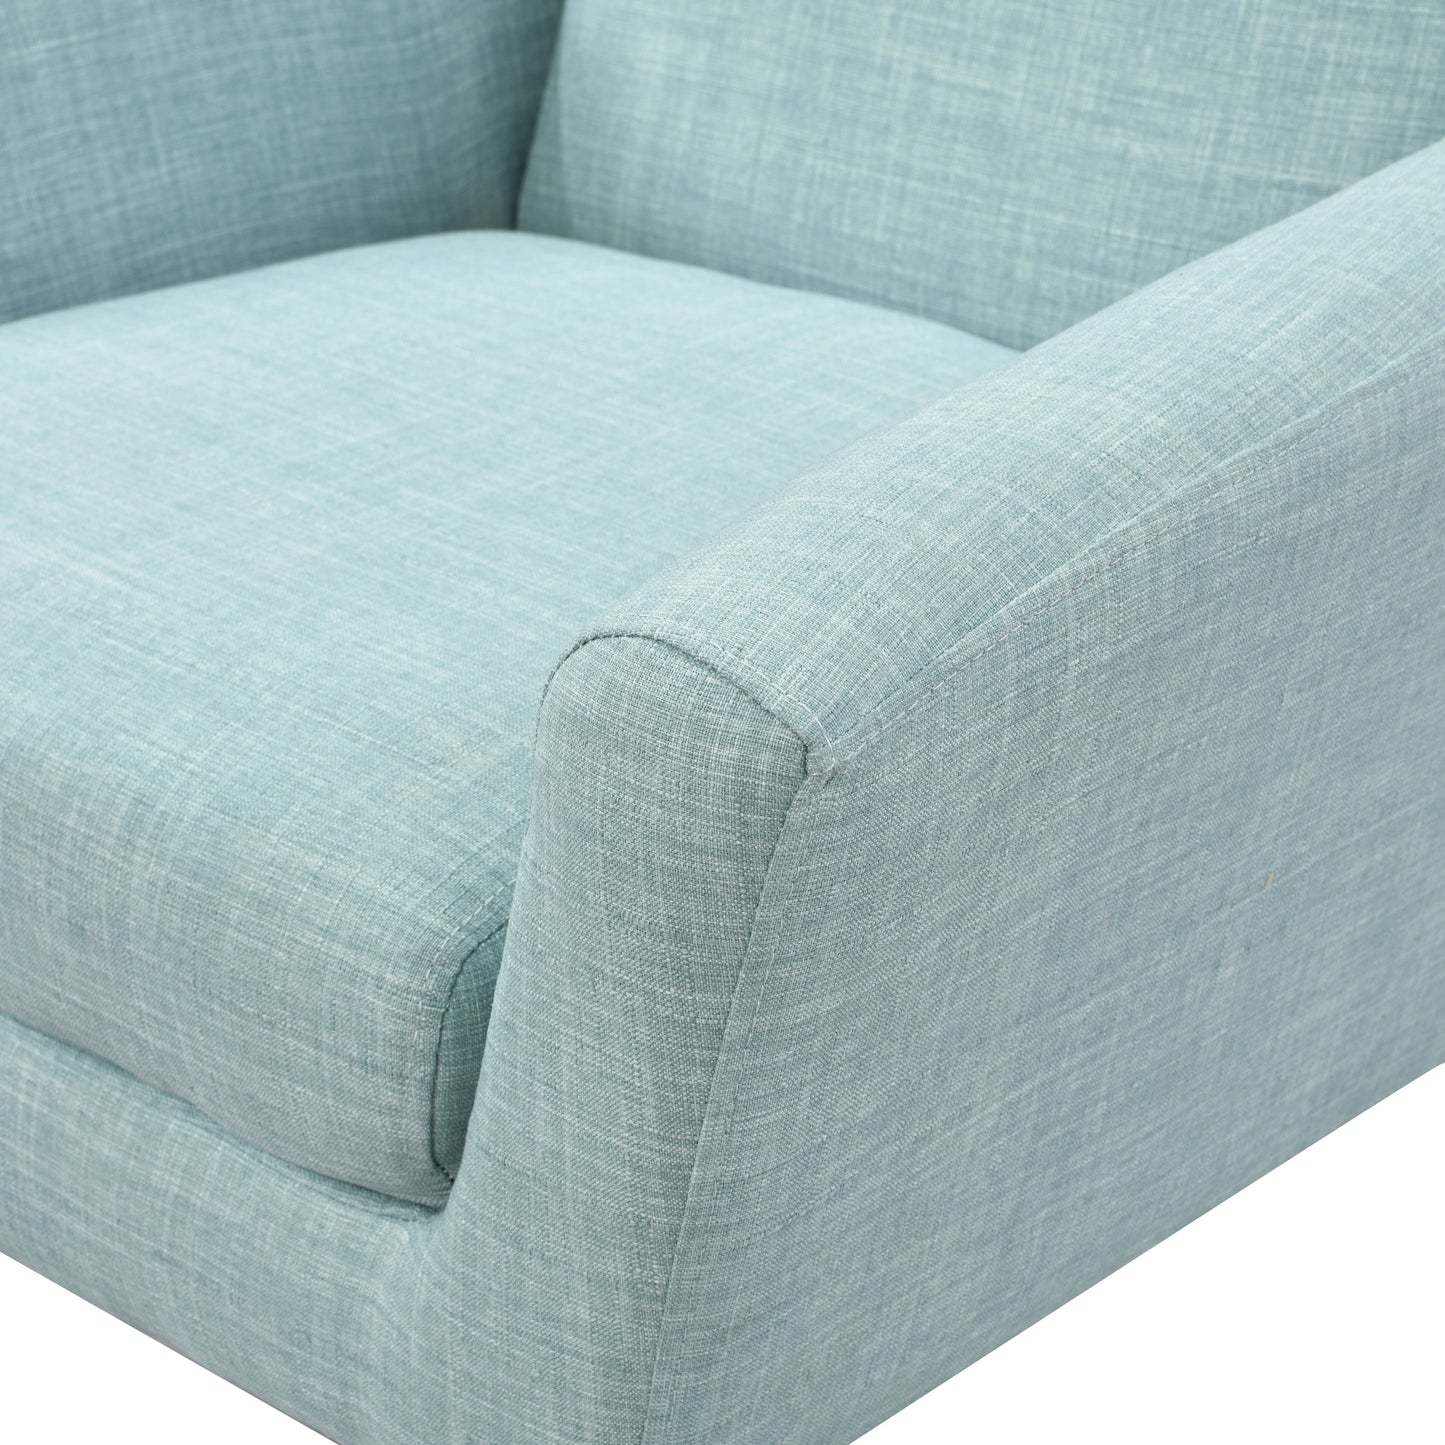 Retro Cool Blue Mid Century Modern Chair